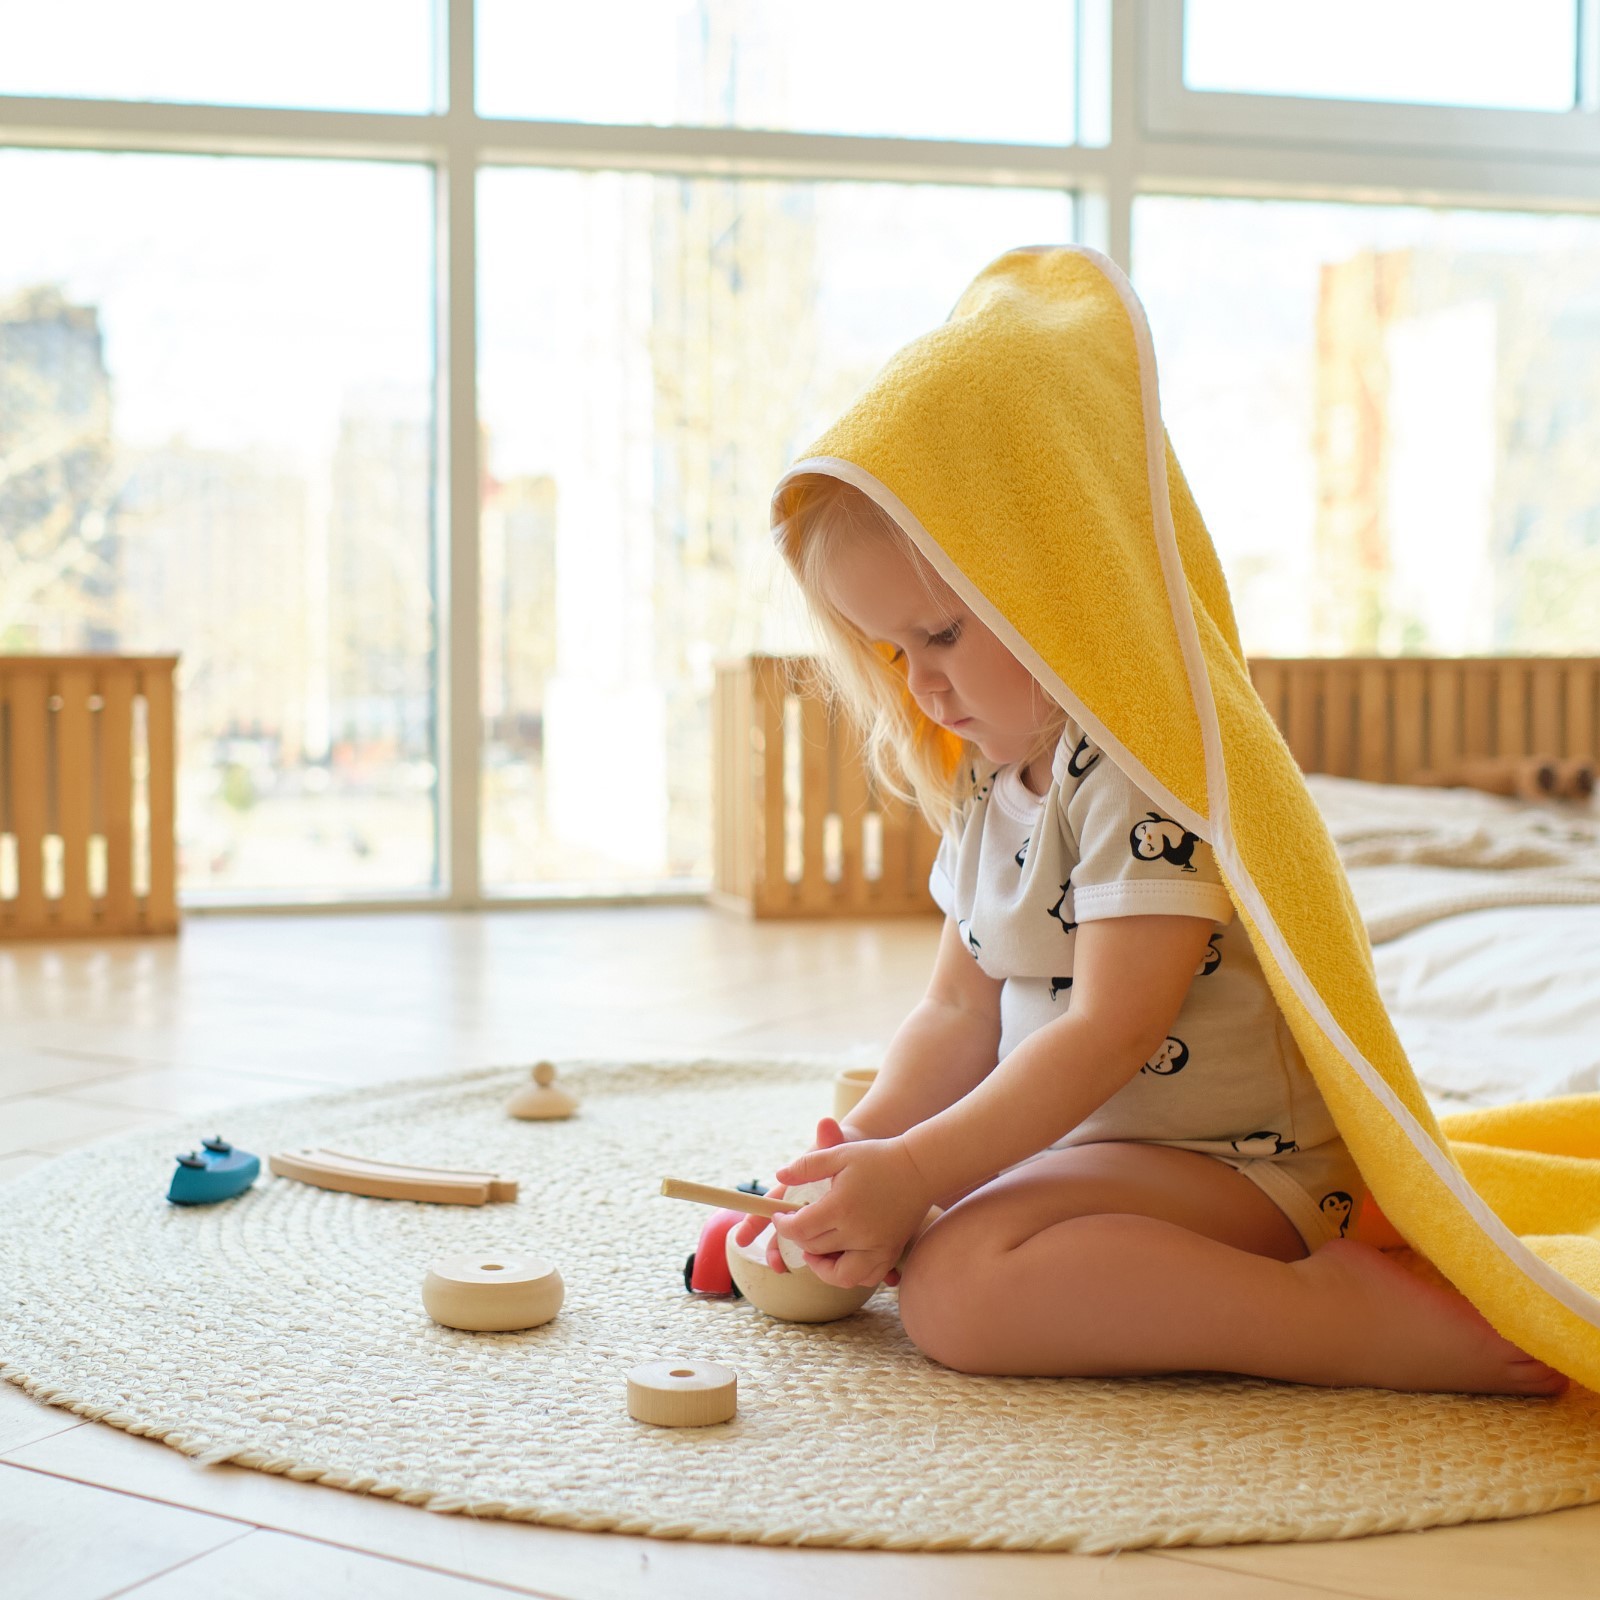 Детское полотенце Sherri цвет: желтый (85х85 см), размер 85х85 см ros910597 Детское полотенце Sherri цвет: желтый (85х85 см) - фото 1